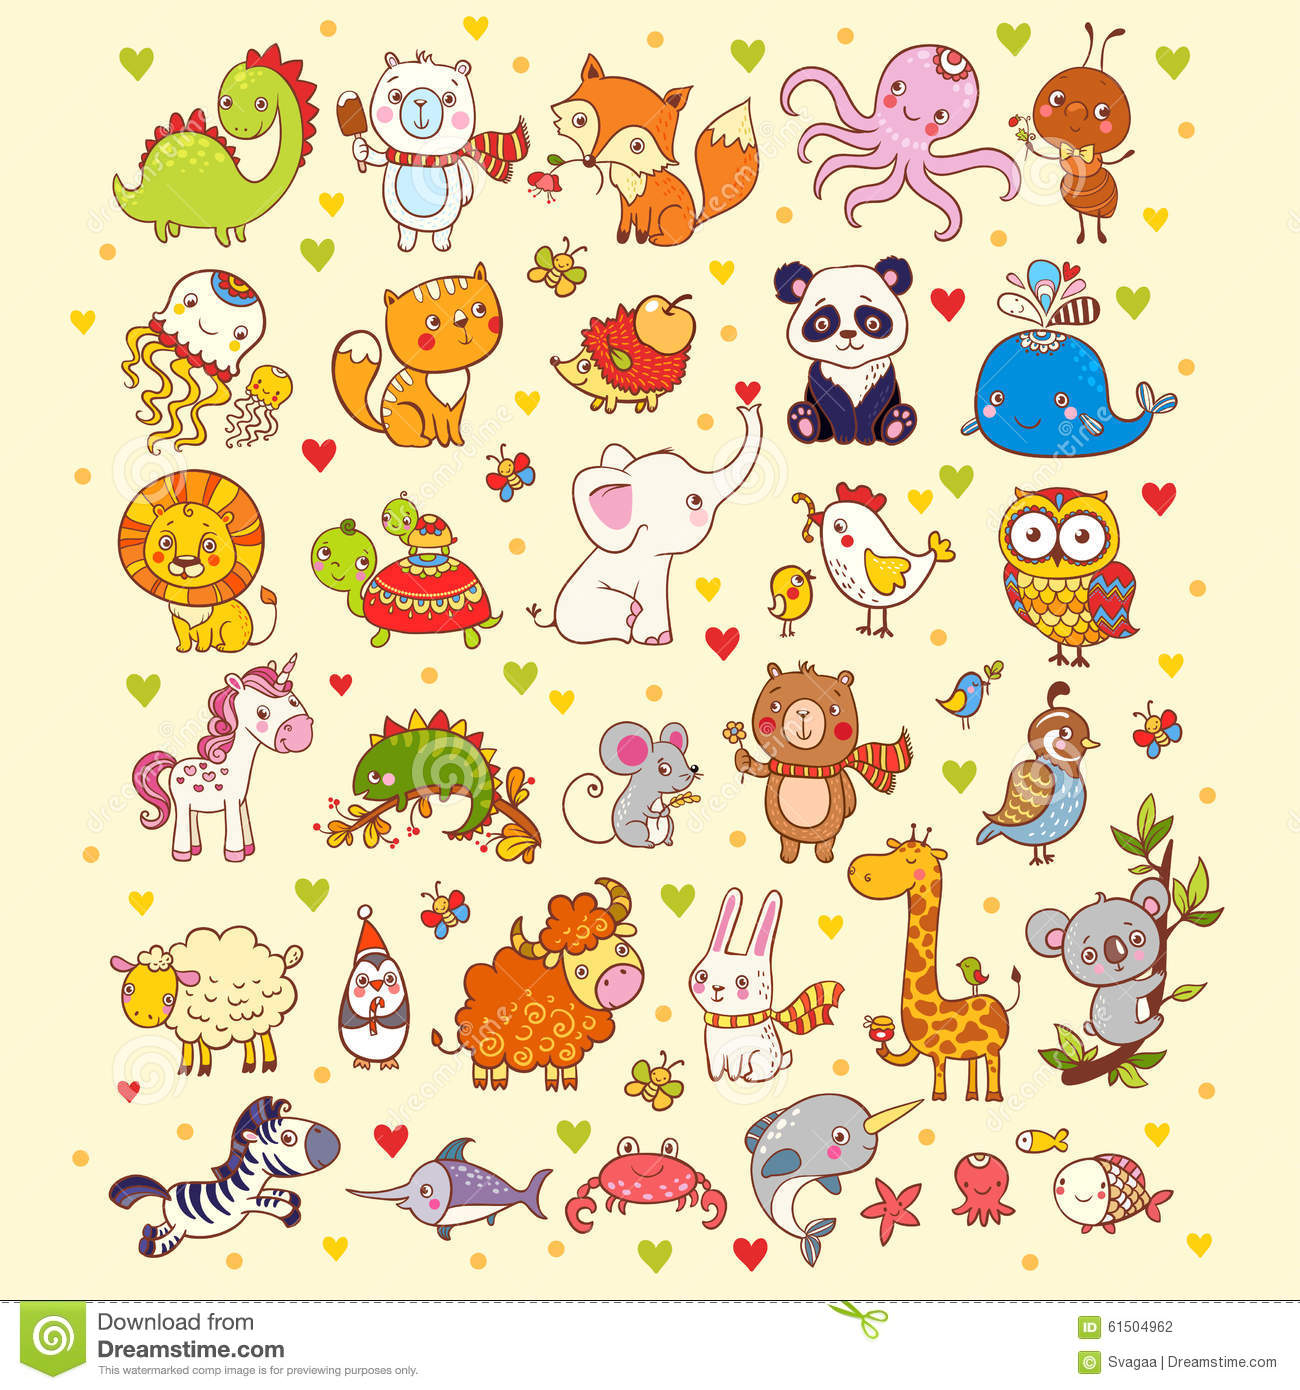 Cute Animal Vector Illustrations